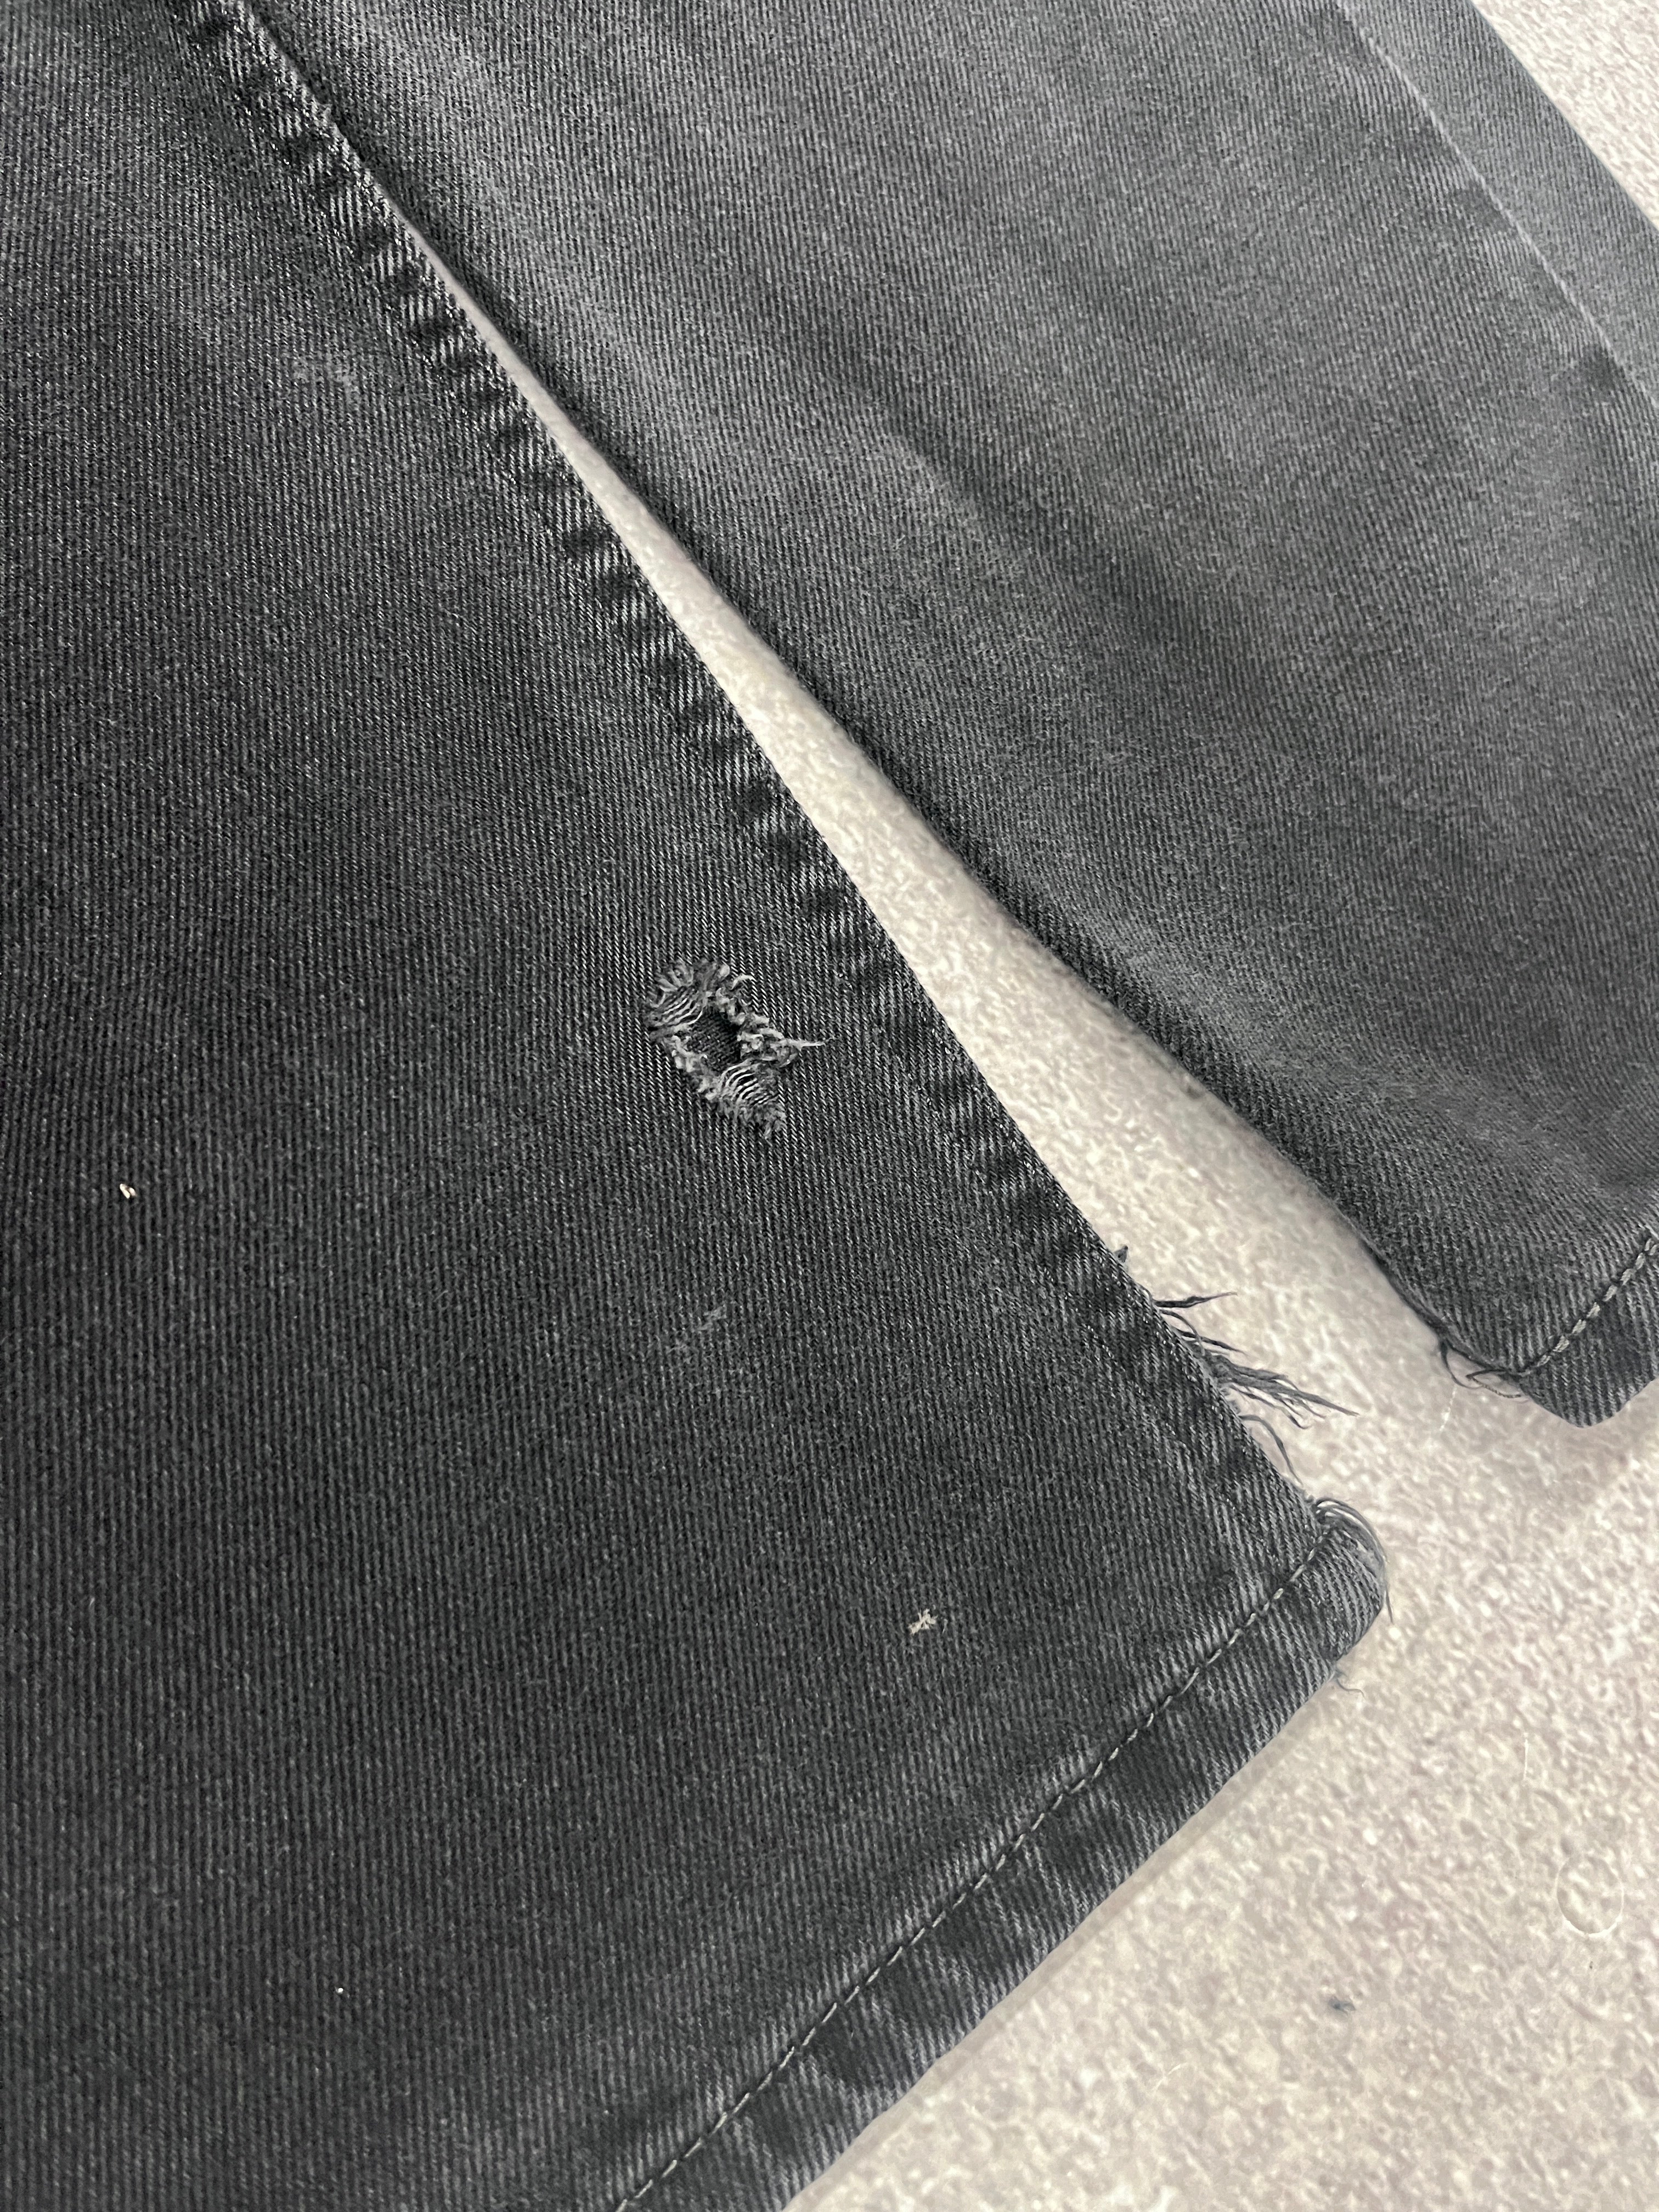 Vintage Levi 550 Denim Jeans Grey // W34 L34 - RHAGHOUSE VINTAGE